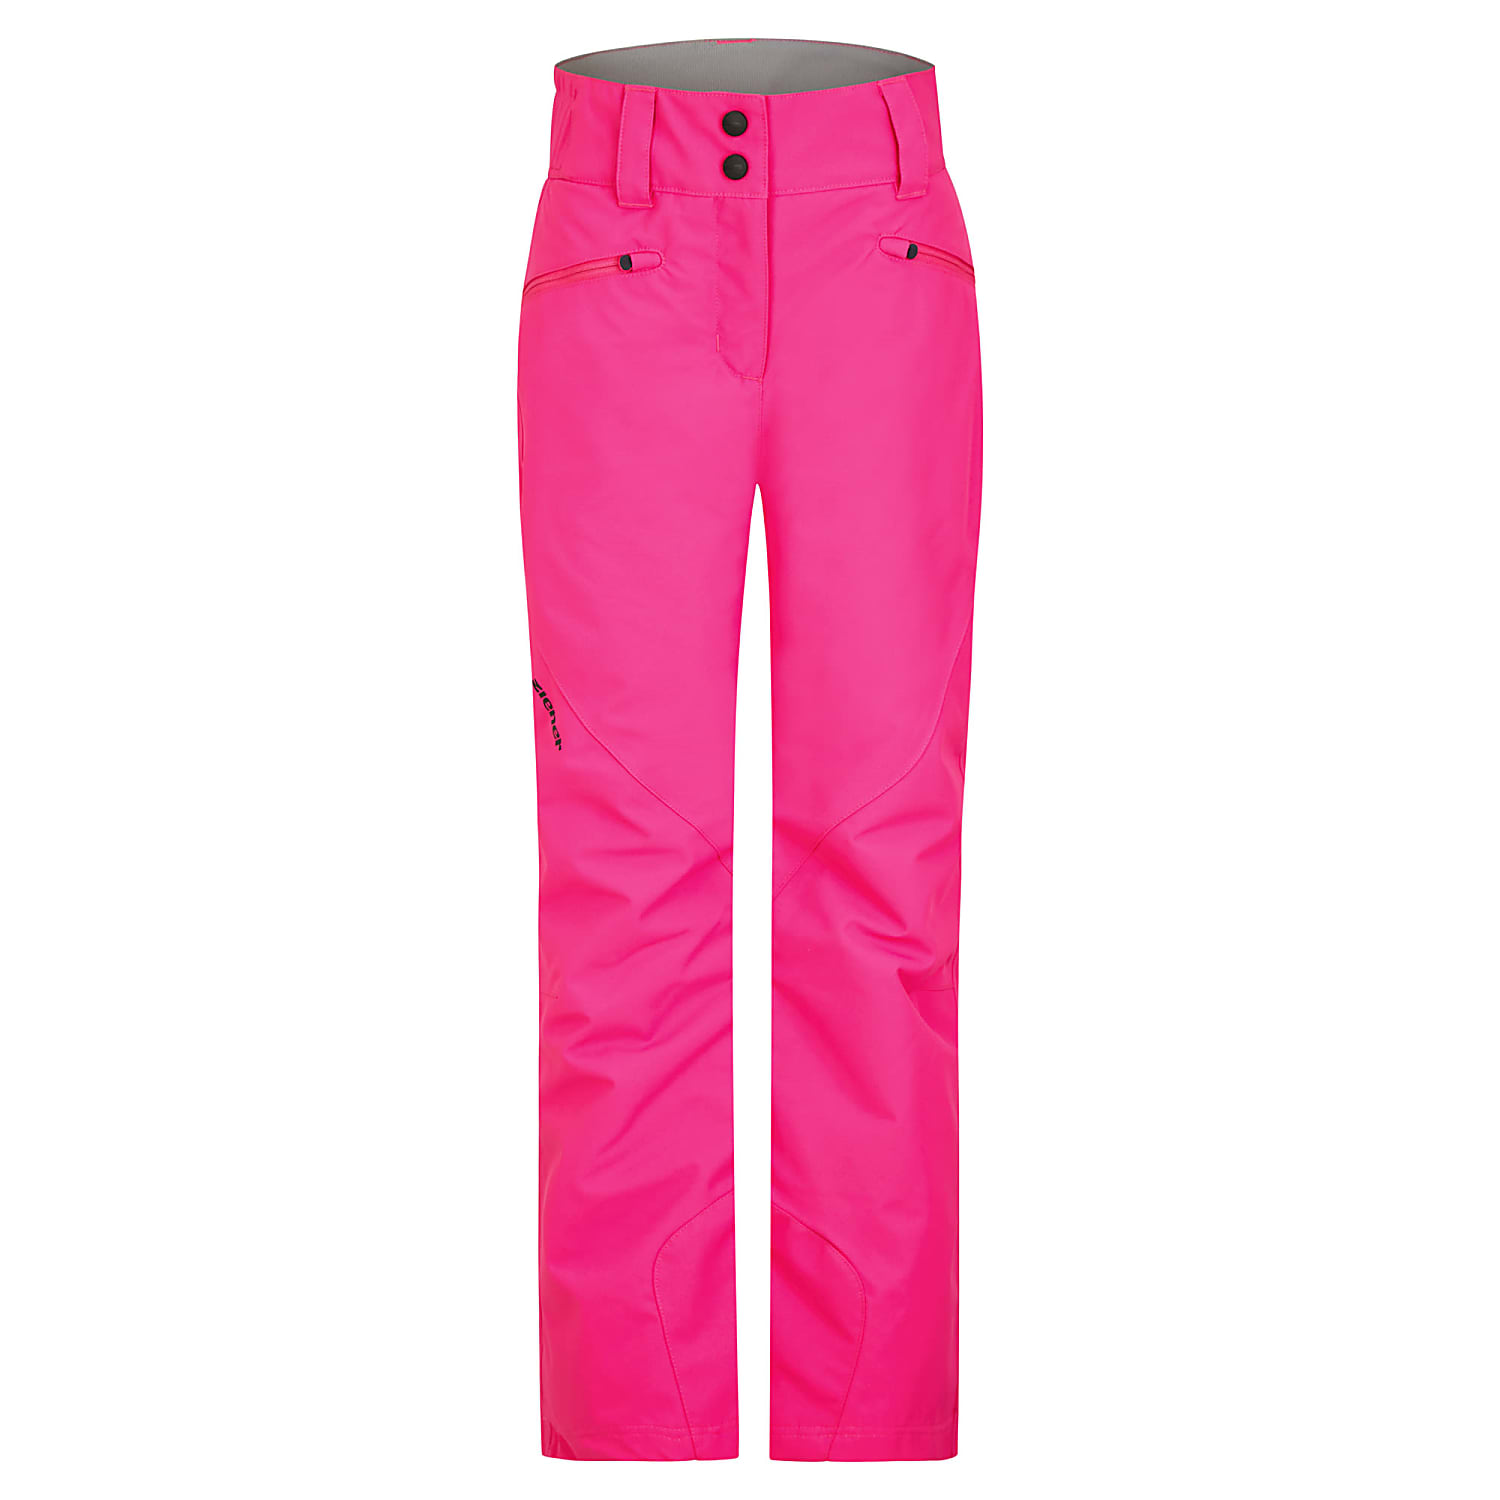 Ziener Bright Pink (PREVIOUS MODEL), ALIN Jetzt kaufen GIRLS online